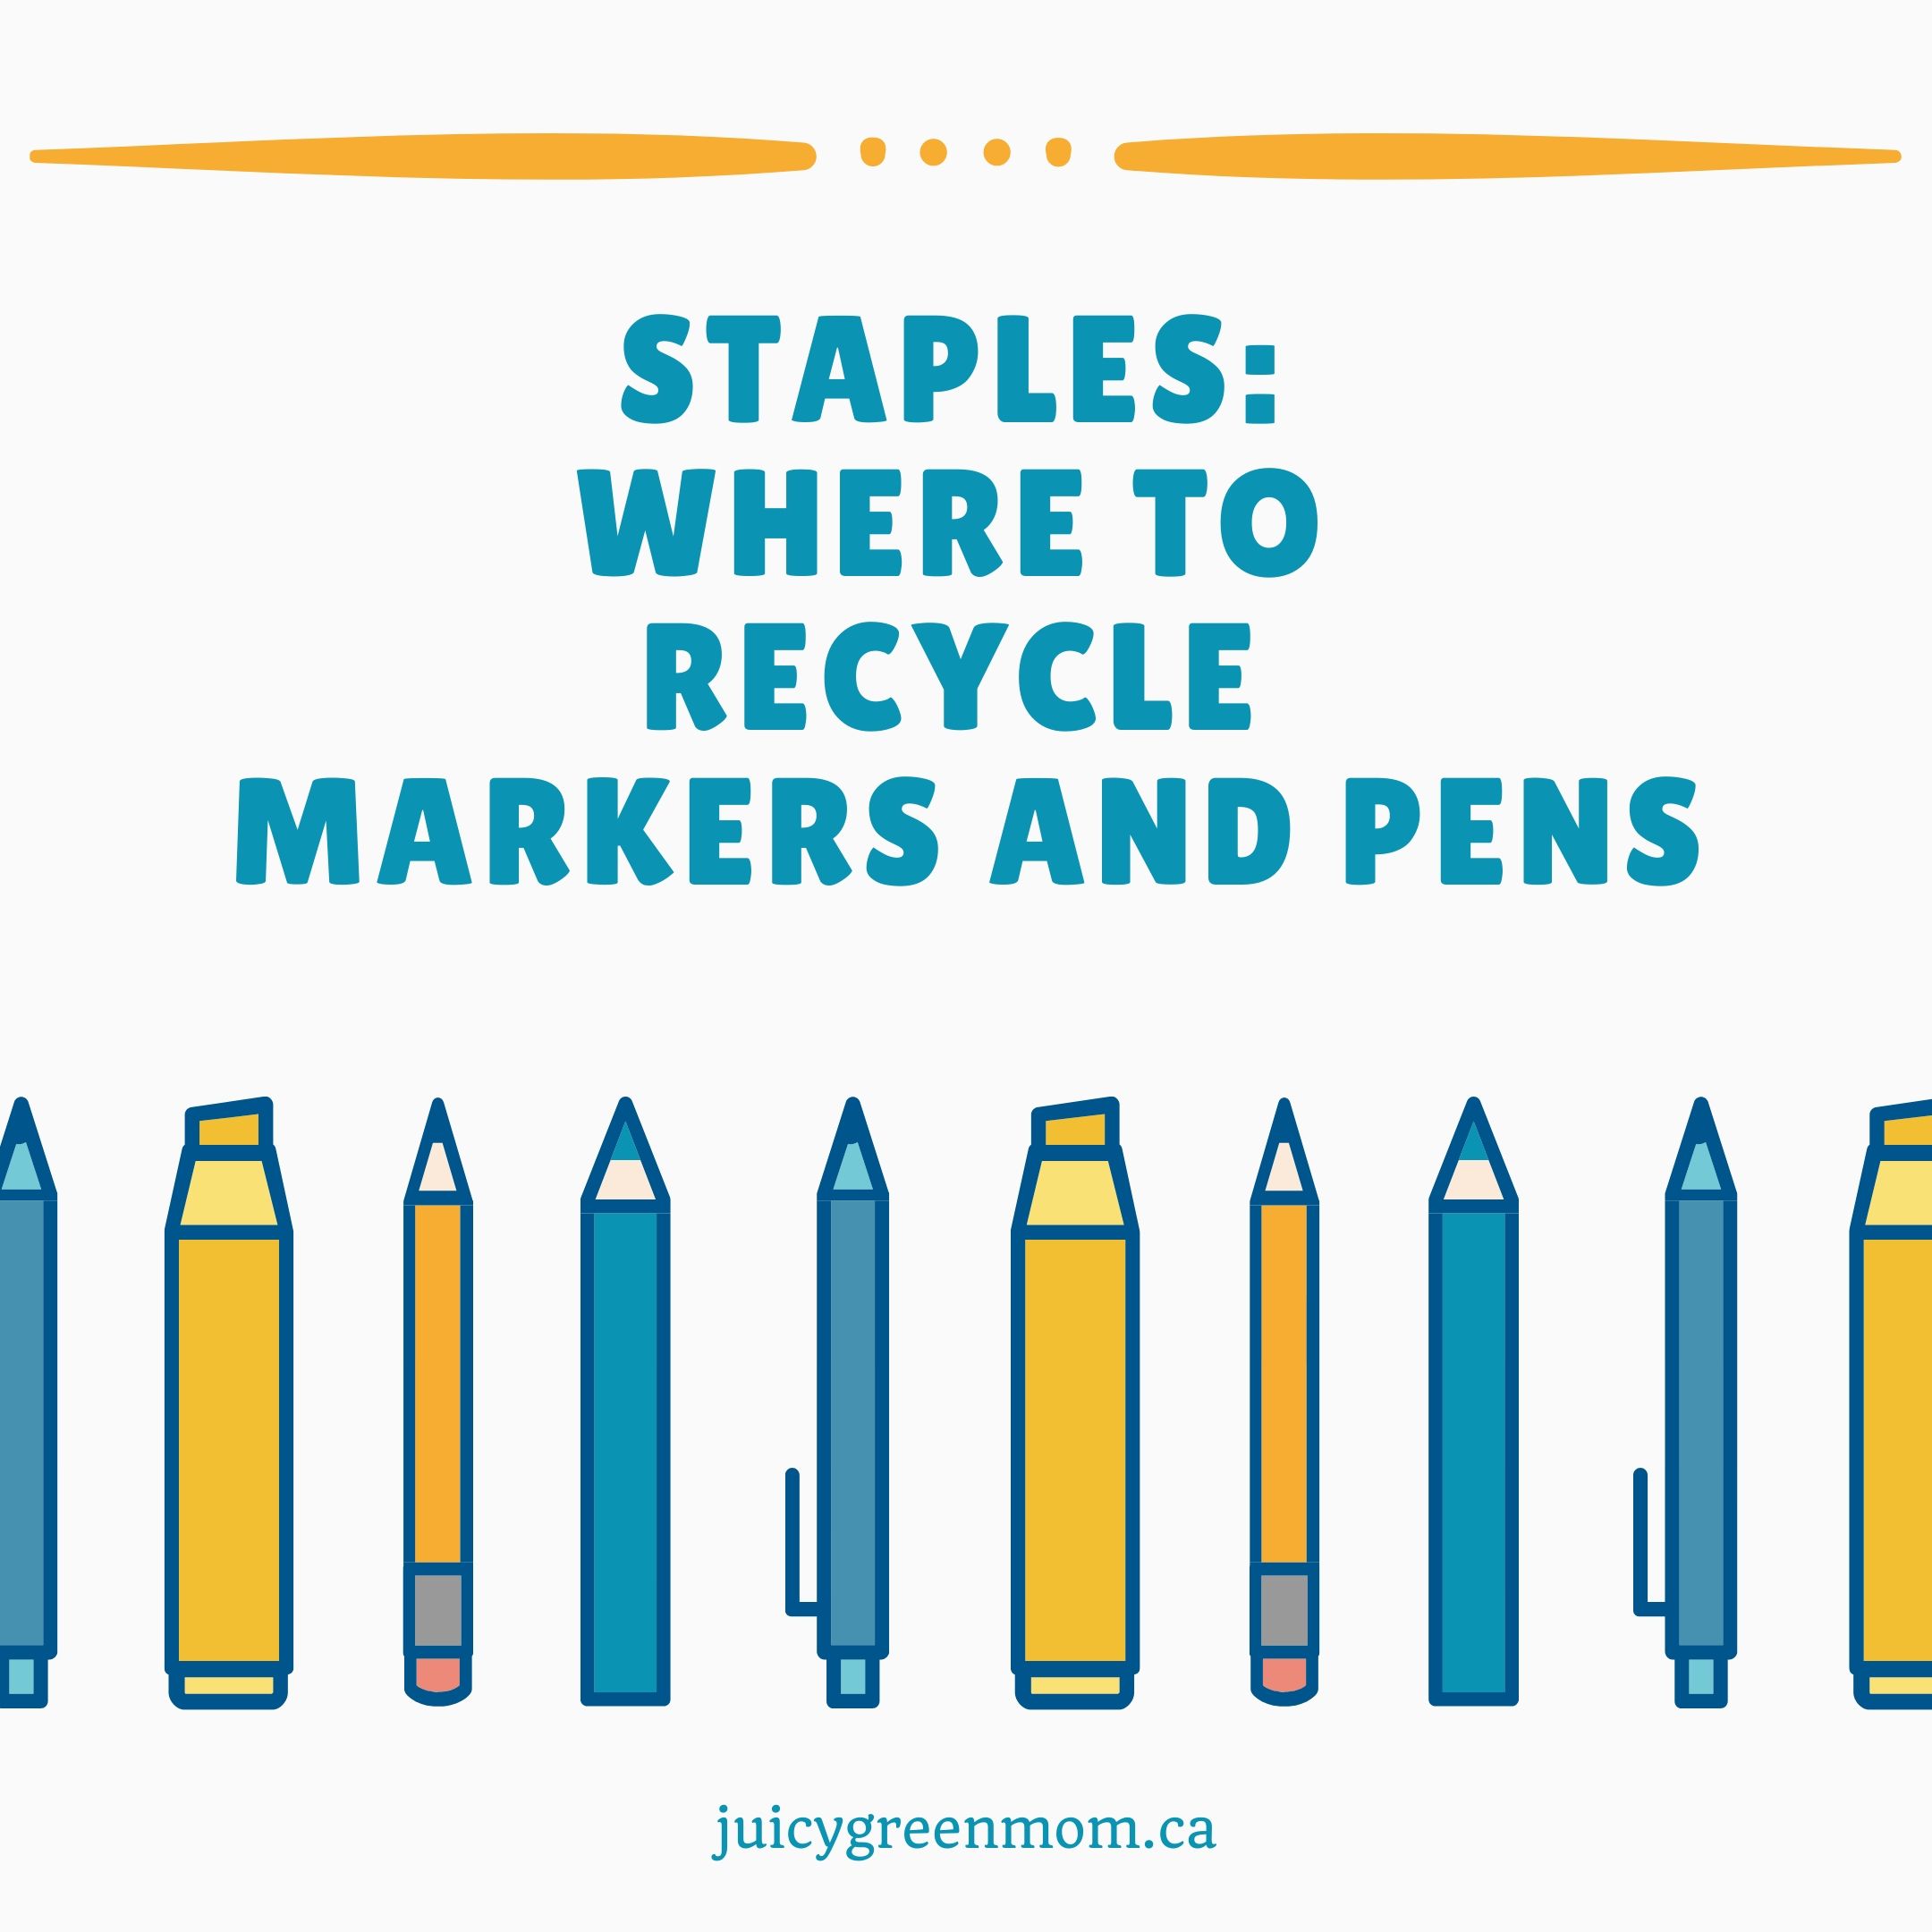 https://juicygreenmom.ca/wp-content/uploads/2014/10/Staples_-Where-to-Recycle-Markers-and-Pens-juicygreenmom.jpg